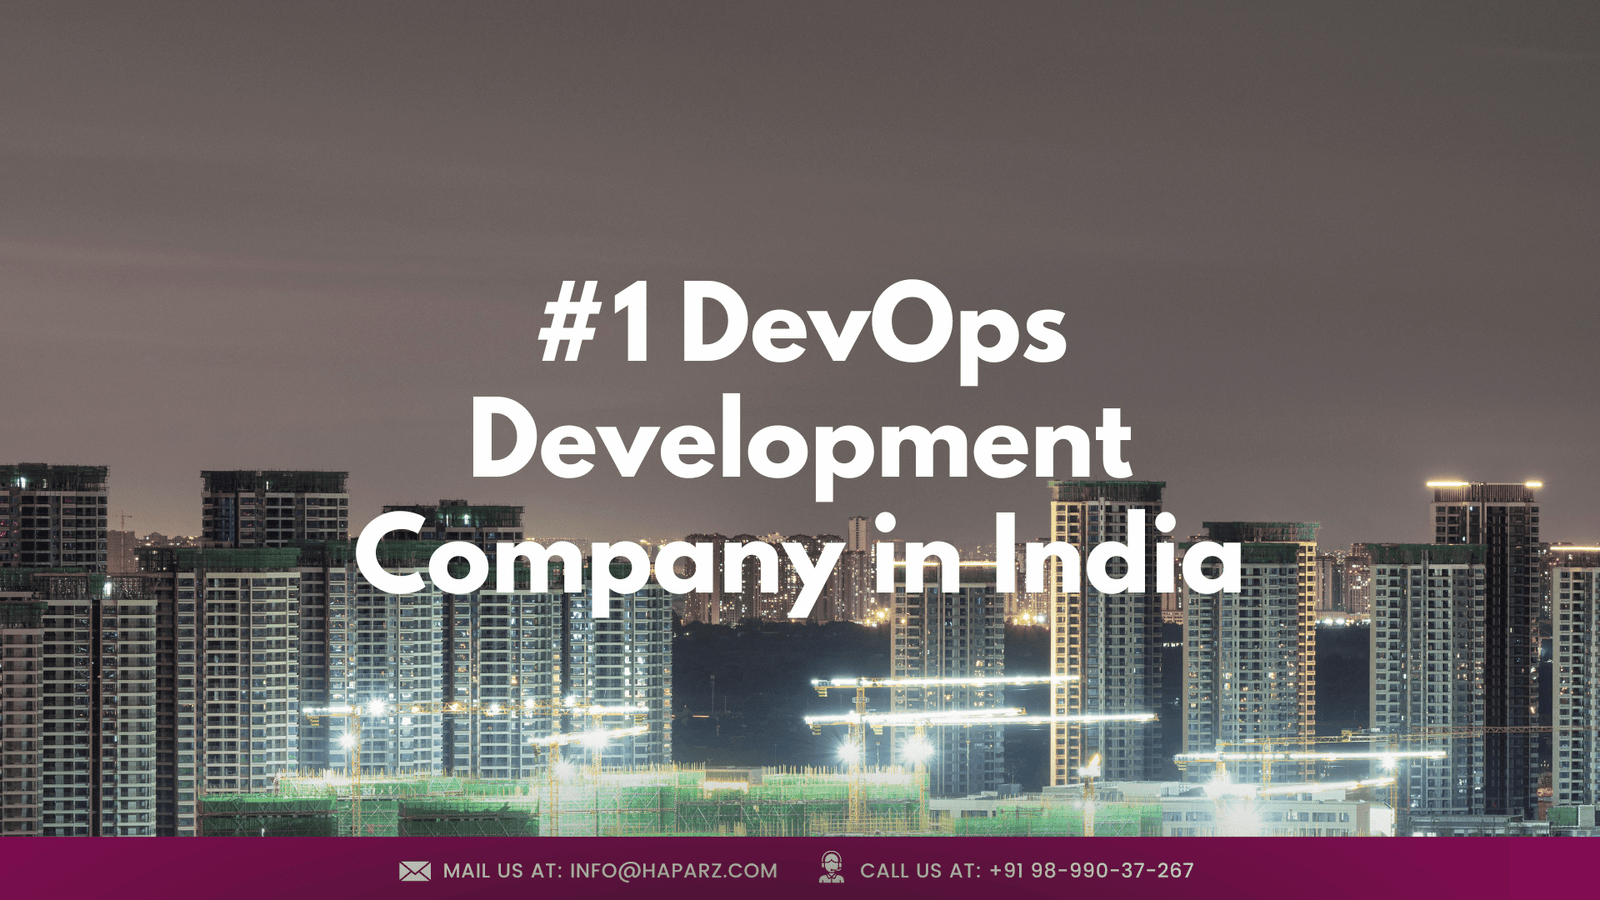 DevOps Development Company